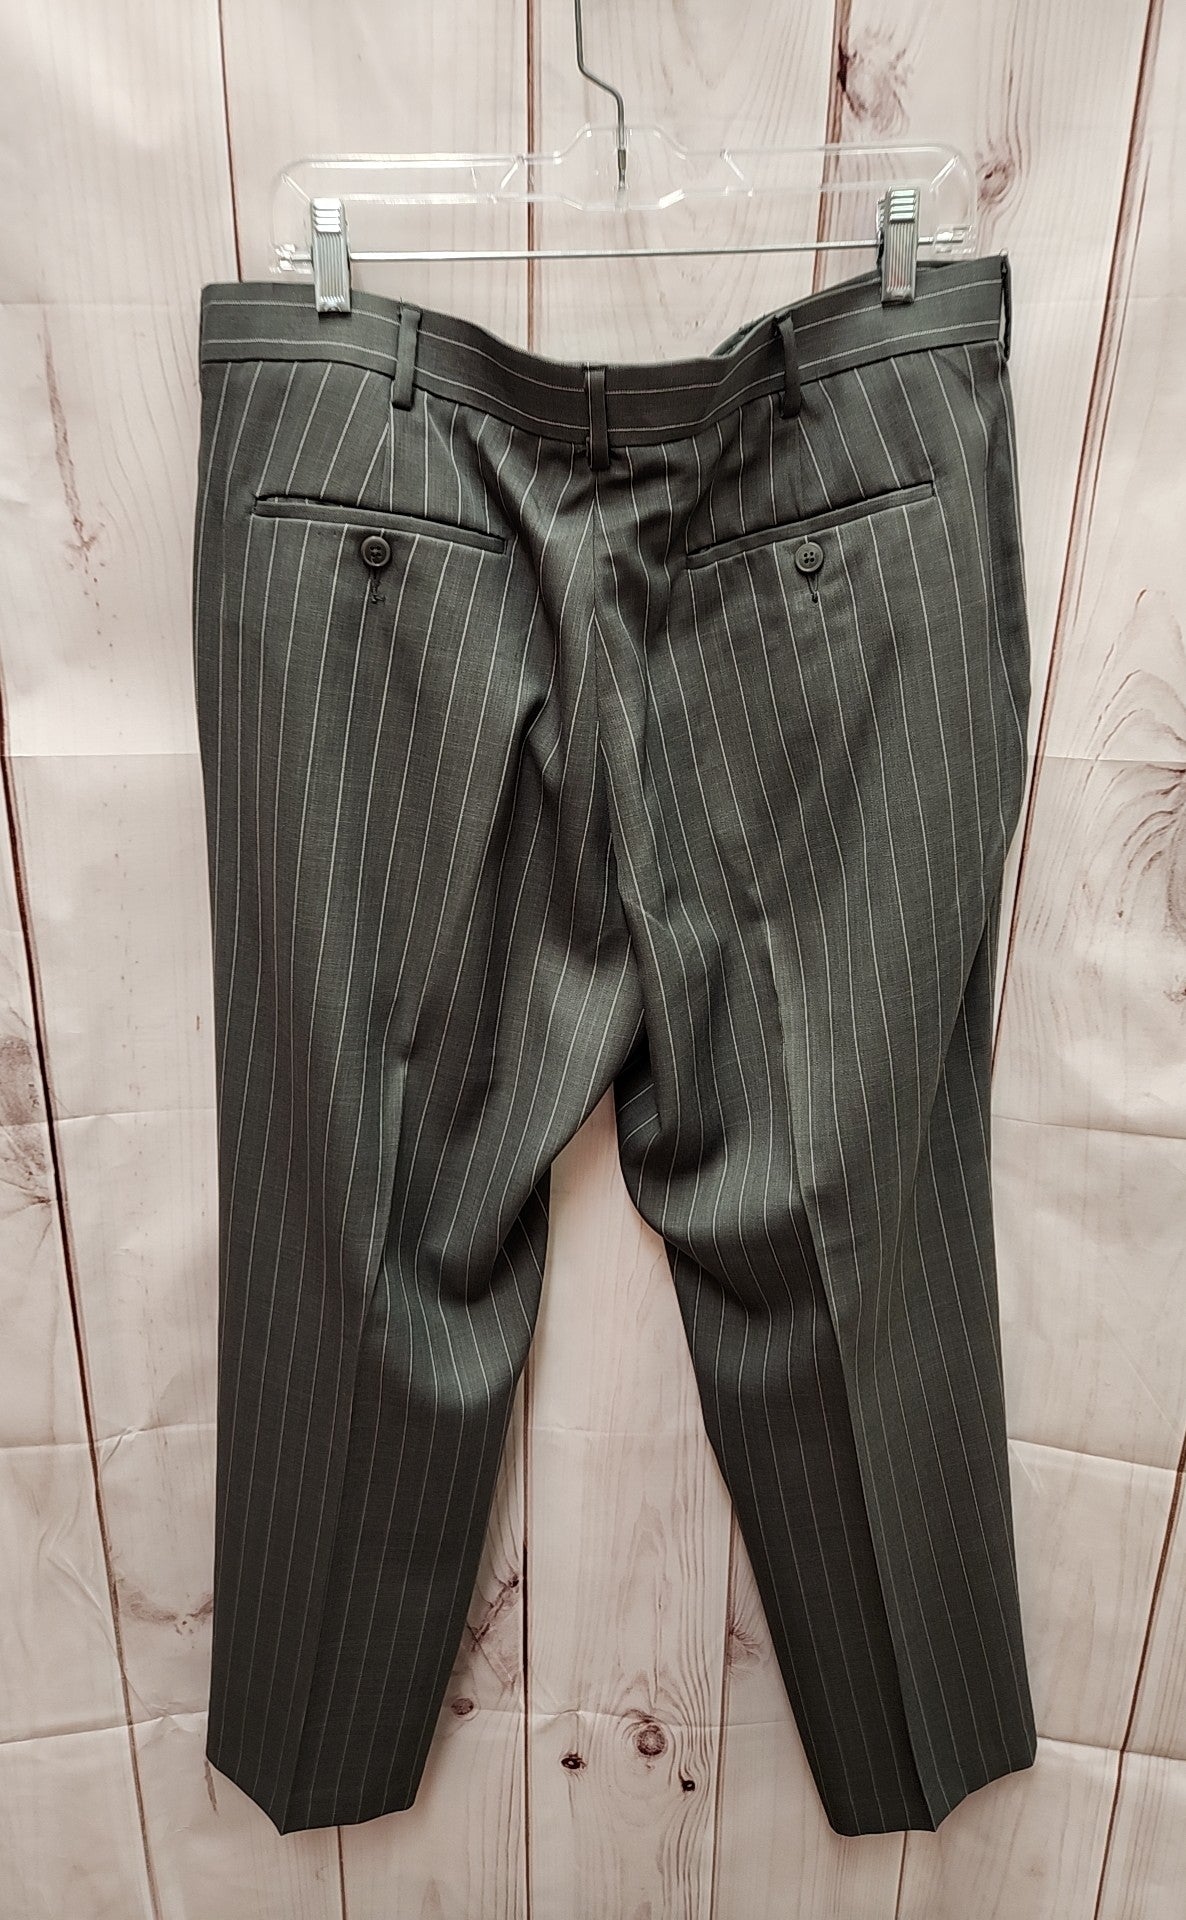 Perry Ellis Men's Size 36x29 Gray Pants